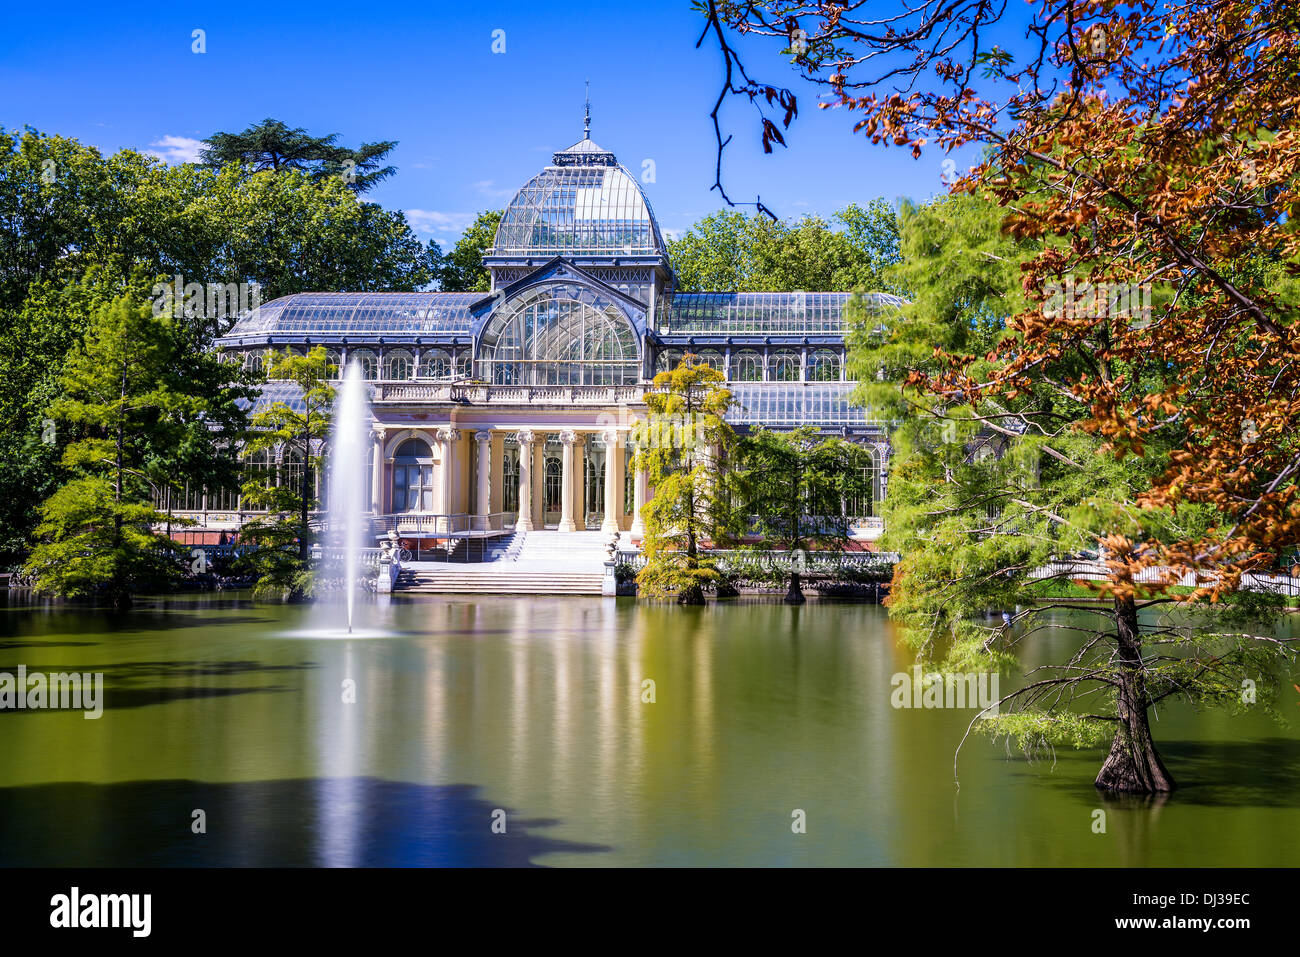 Crystal Palace, Palacio de cristal in Retiro Park,Madrid, Spain. Stock Photo